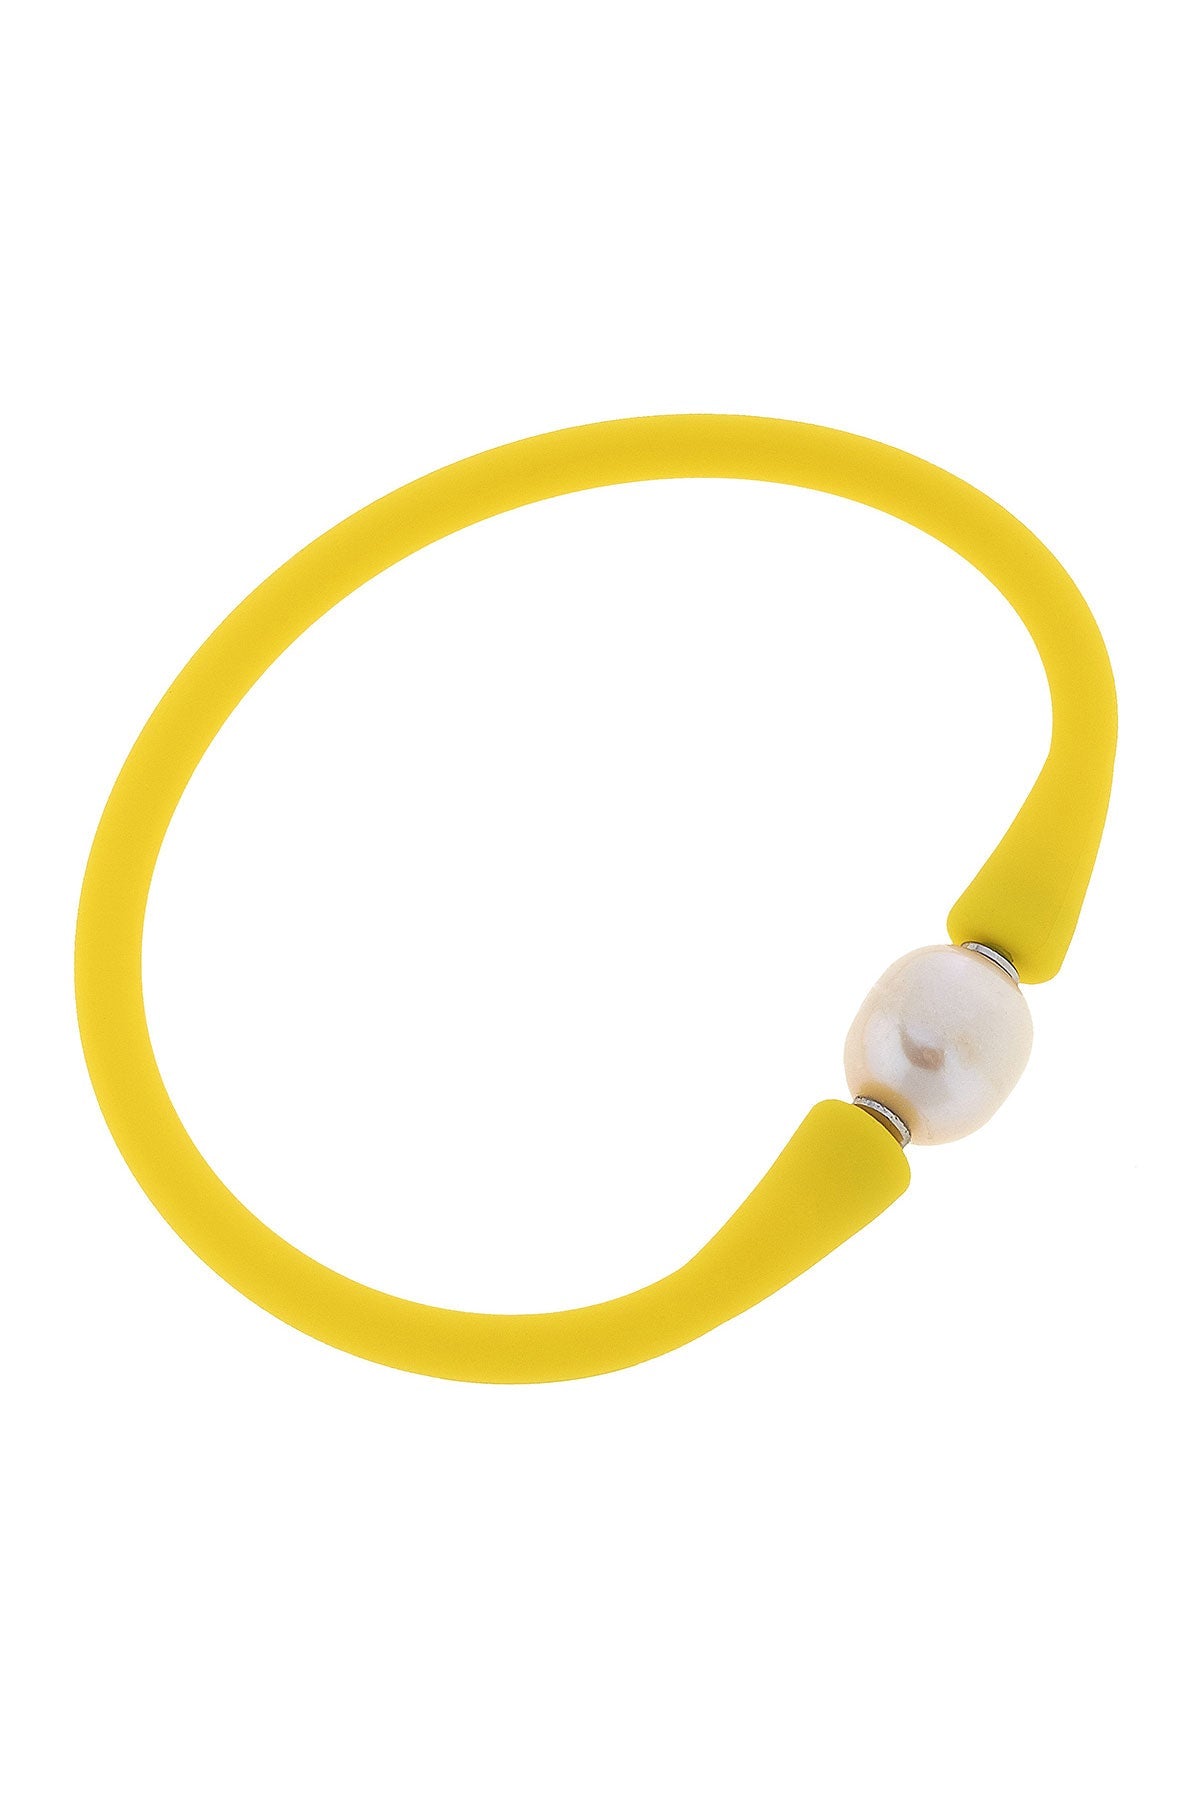 Bali Freshwater Pearl Silicone Bracelet in Yellow